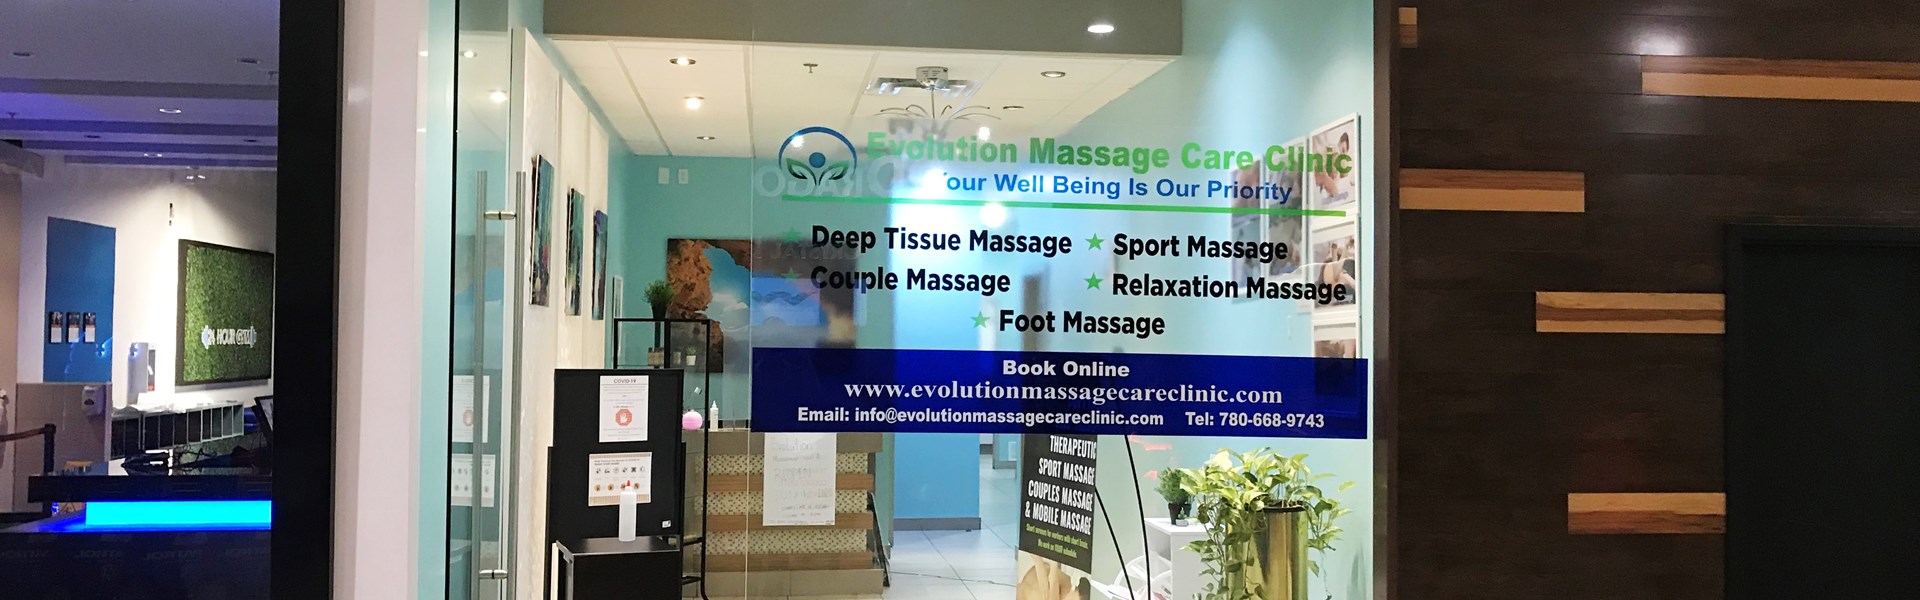 Evolution Massage Care Clinic - Phase II